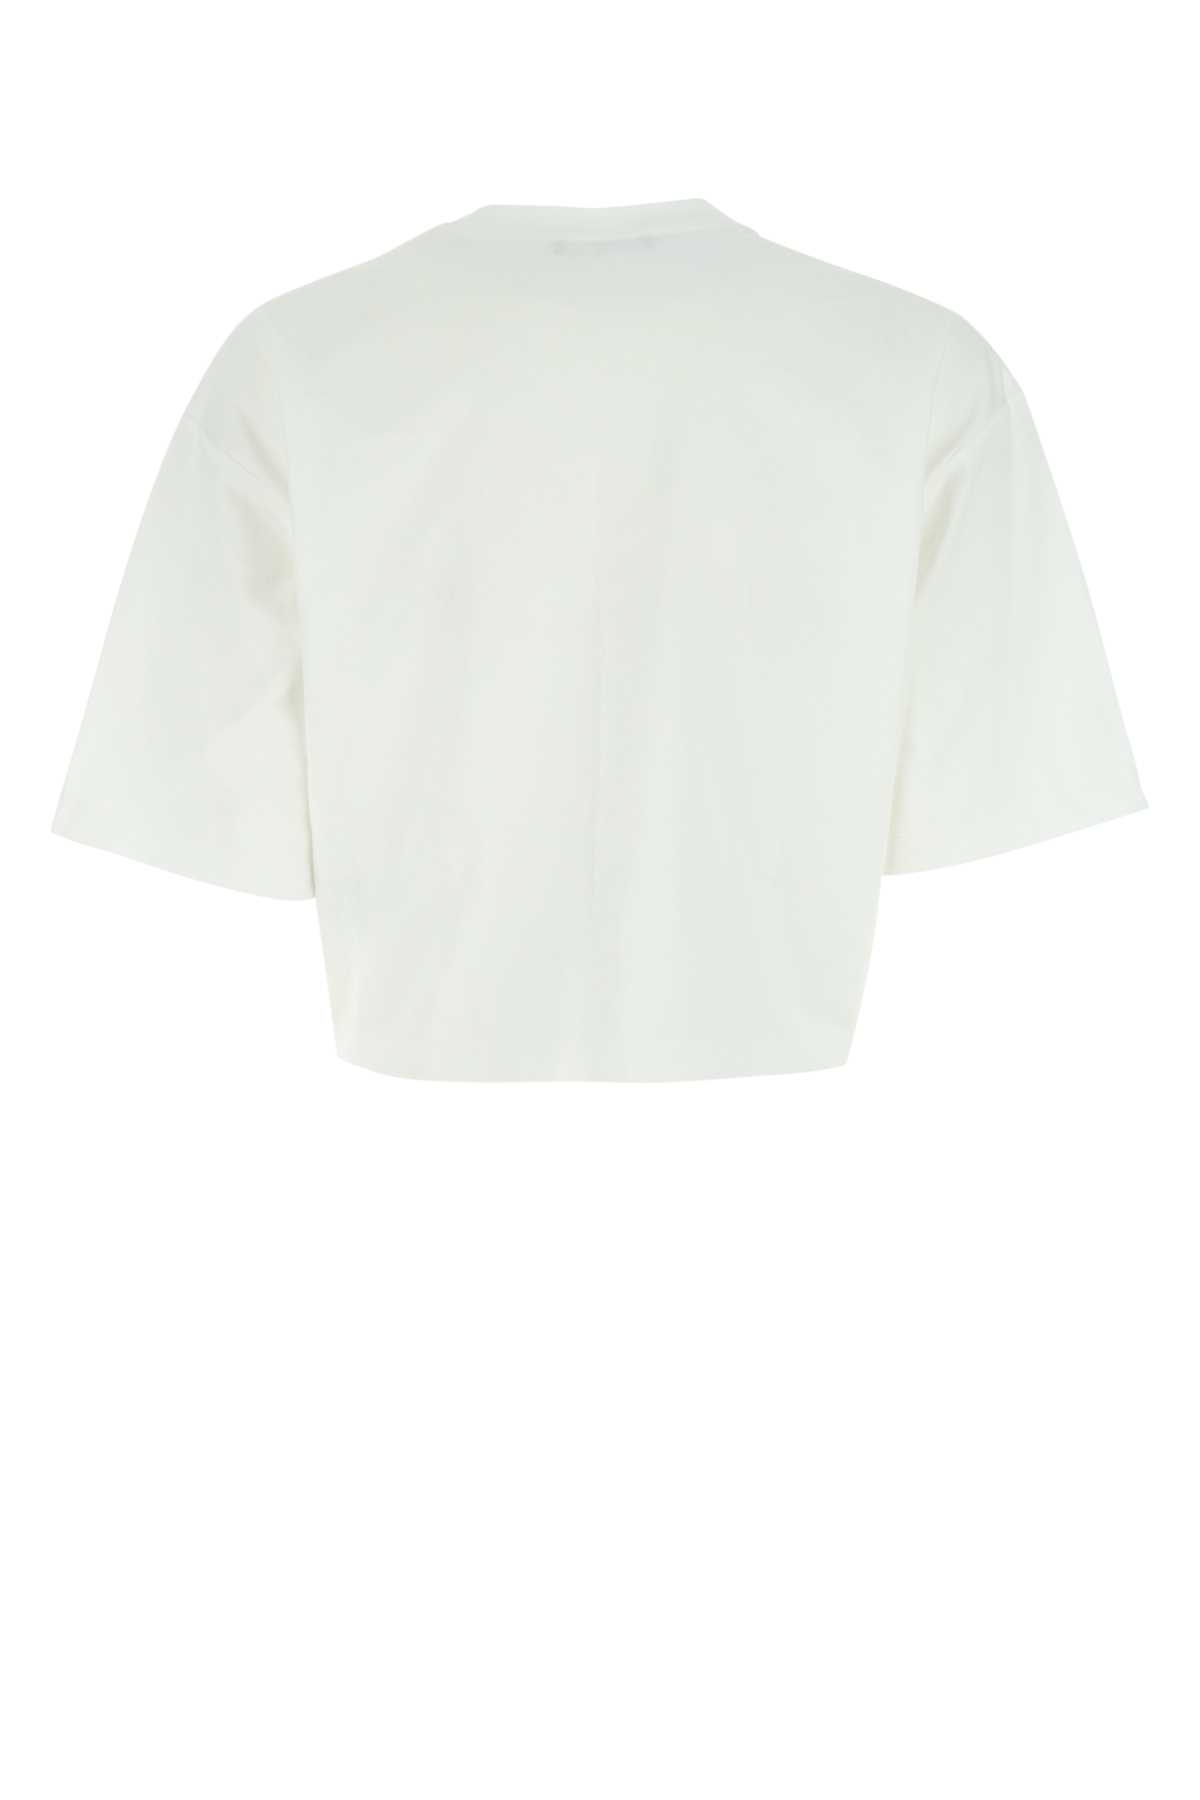 Balmain White Cotton Oversize T-shirt In Gmd